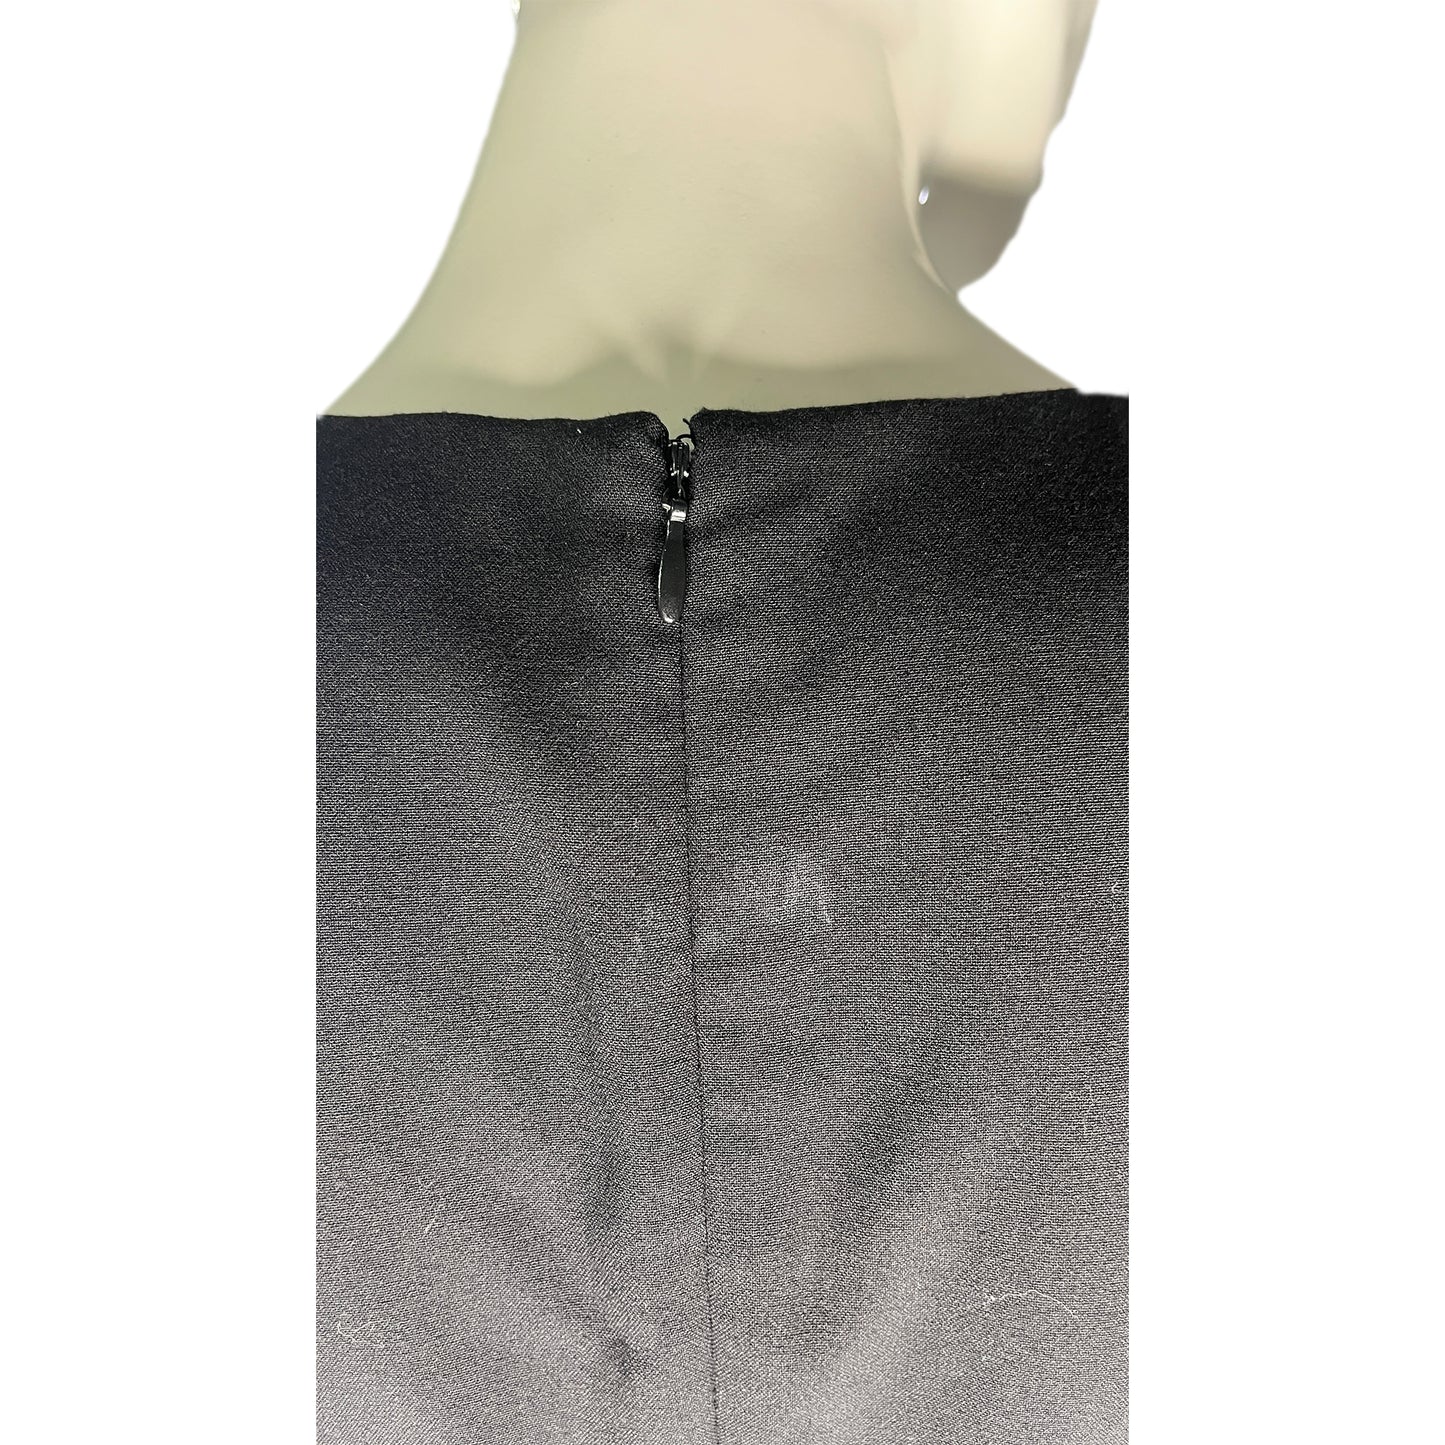 Calvin Klein Dress Sleeveless Snakeskin Panel Detail Black, White Size 2 SKU 000213-3